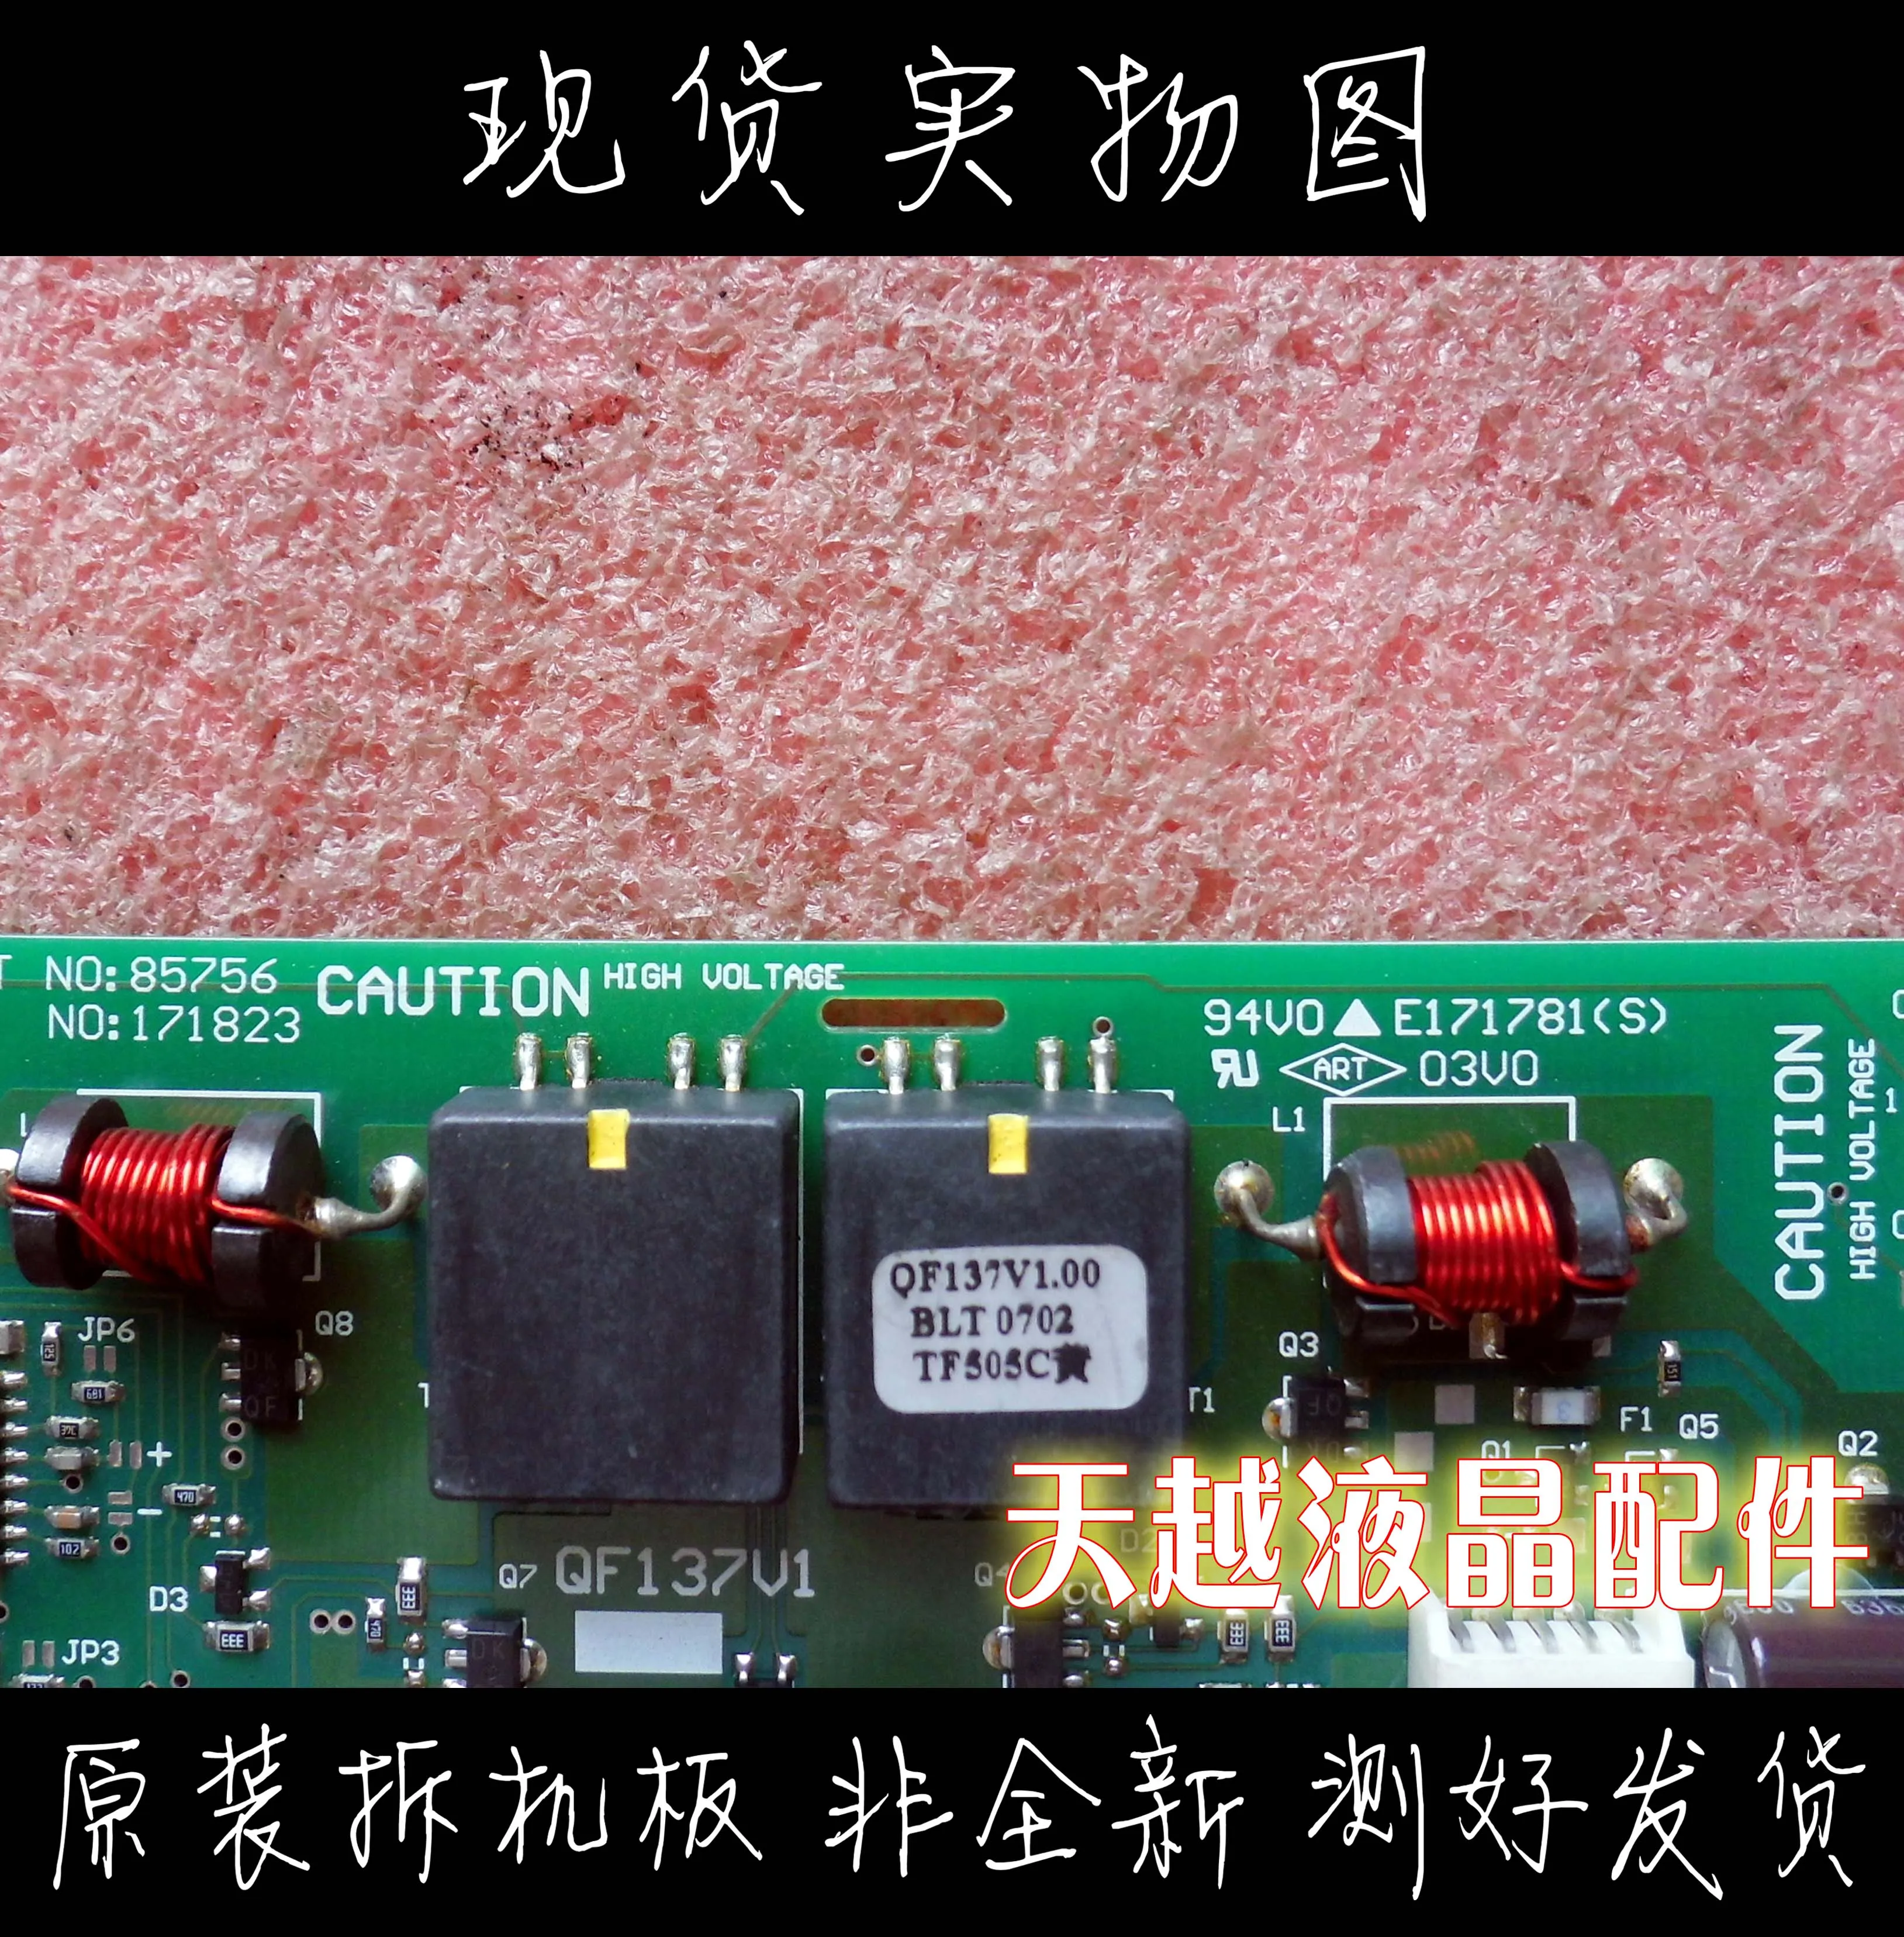 E171781(S) Инвертор QF137V1. 00 плита высокого давления NO: 85756 NO: 171823